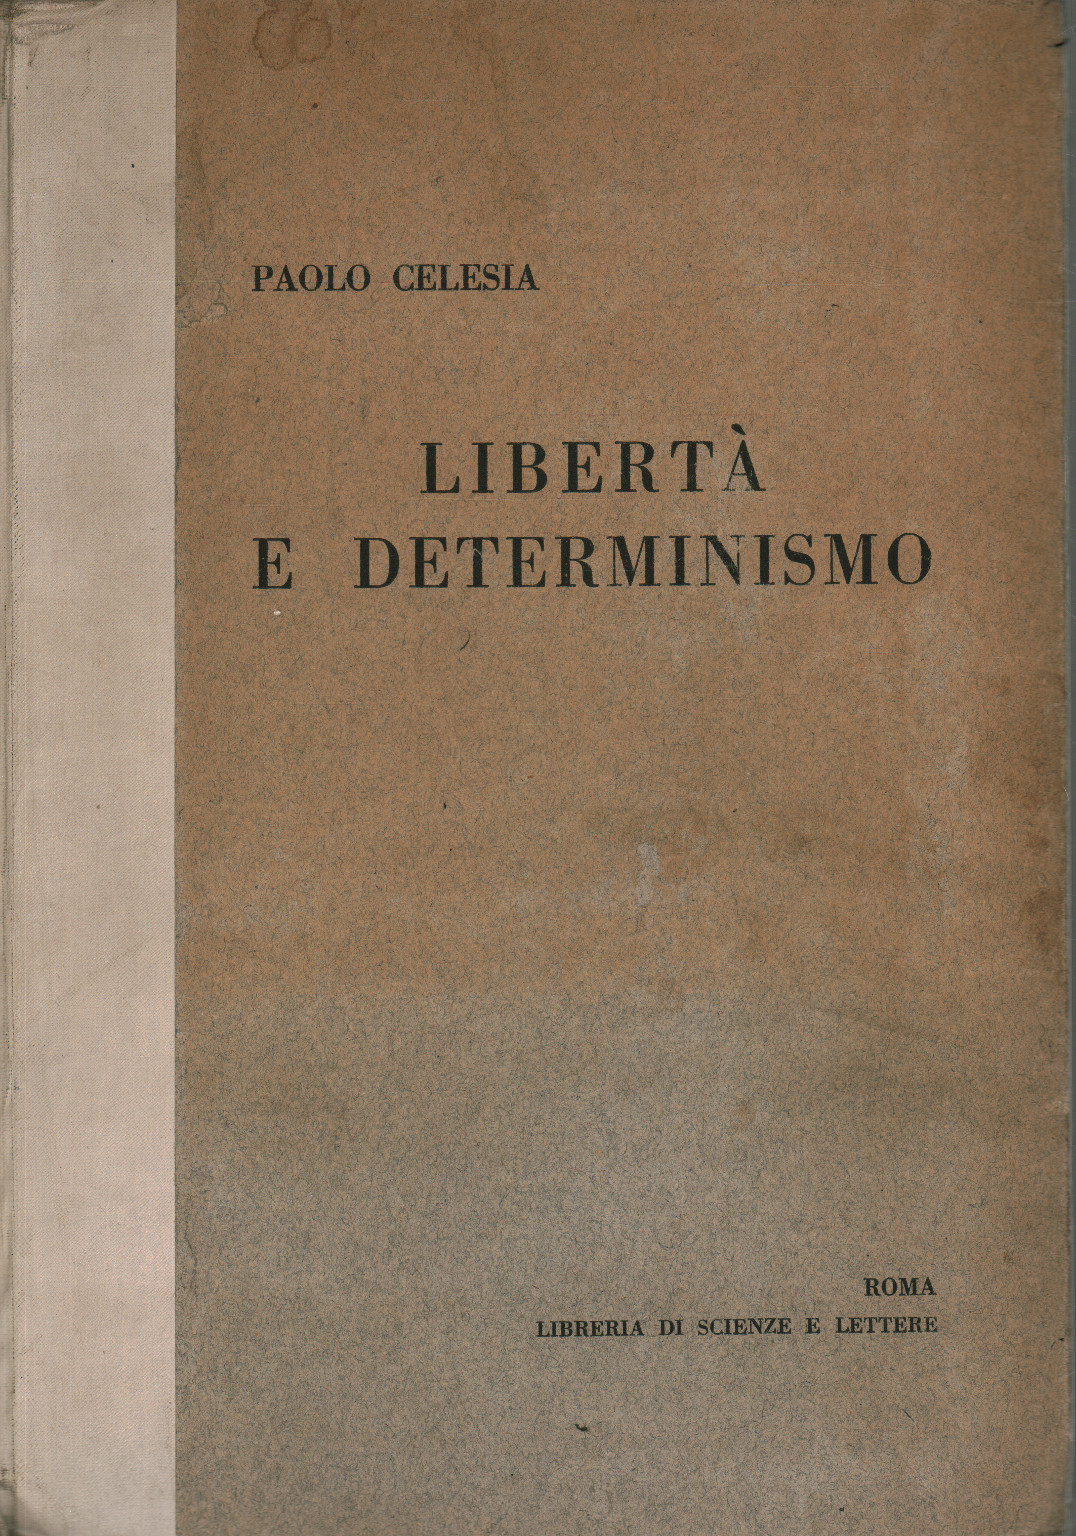 Libertà e determinismo, s.a.